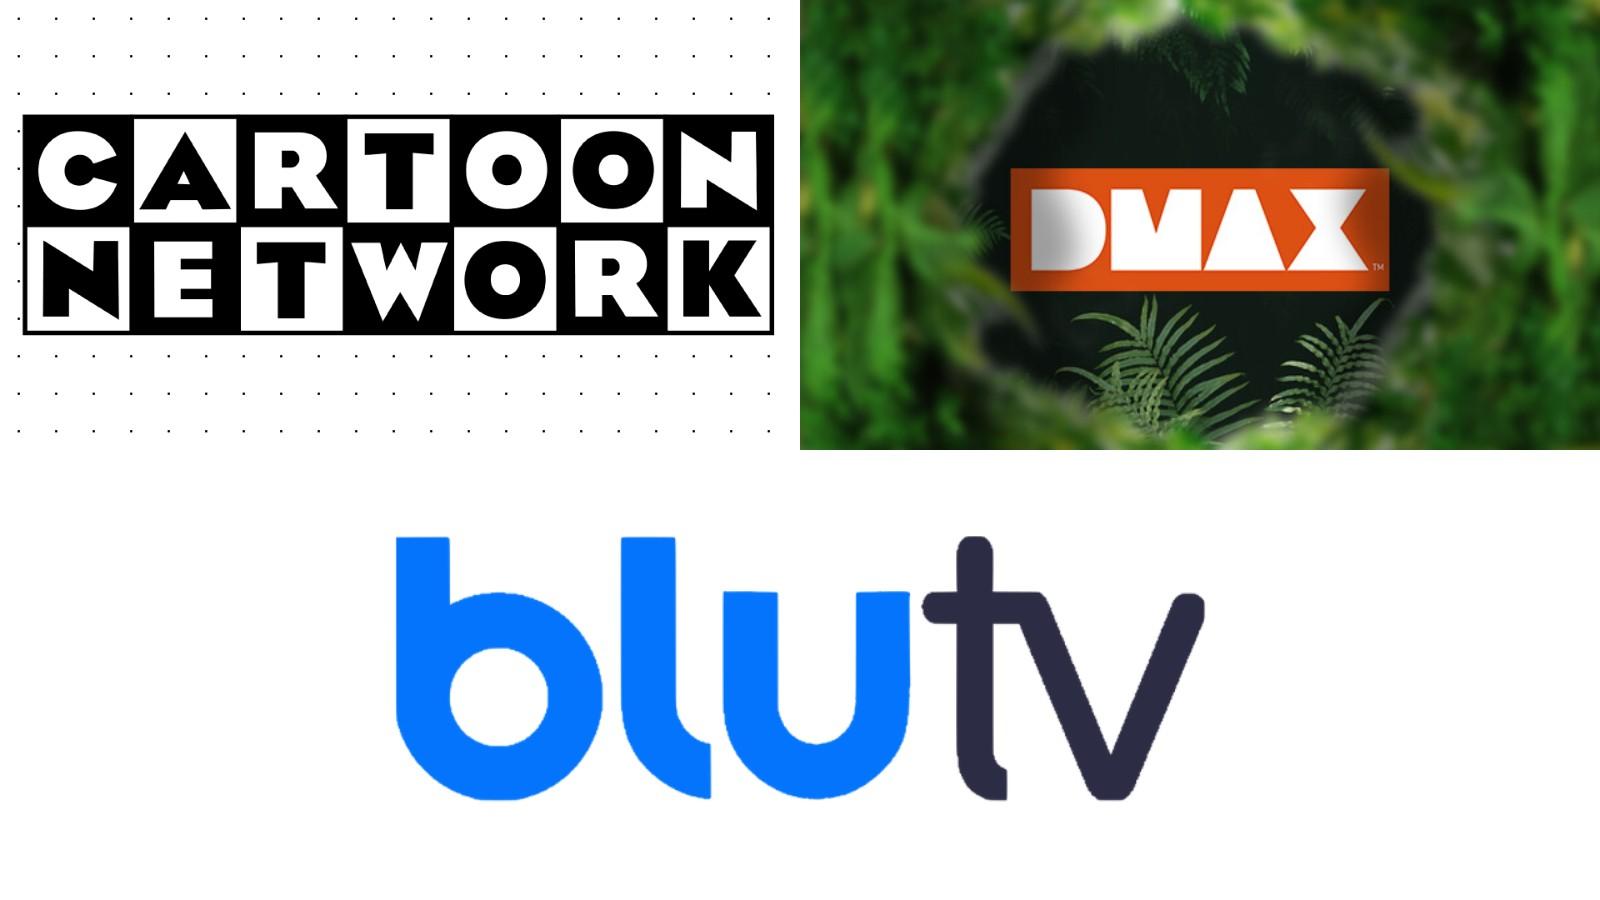 cartoon network bluetv dmax logo